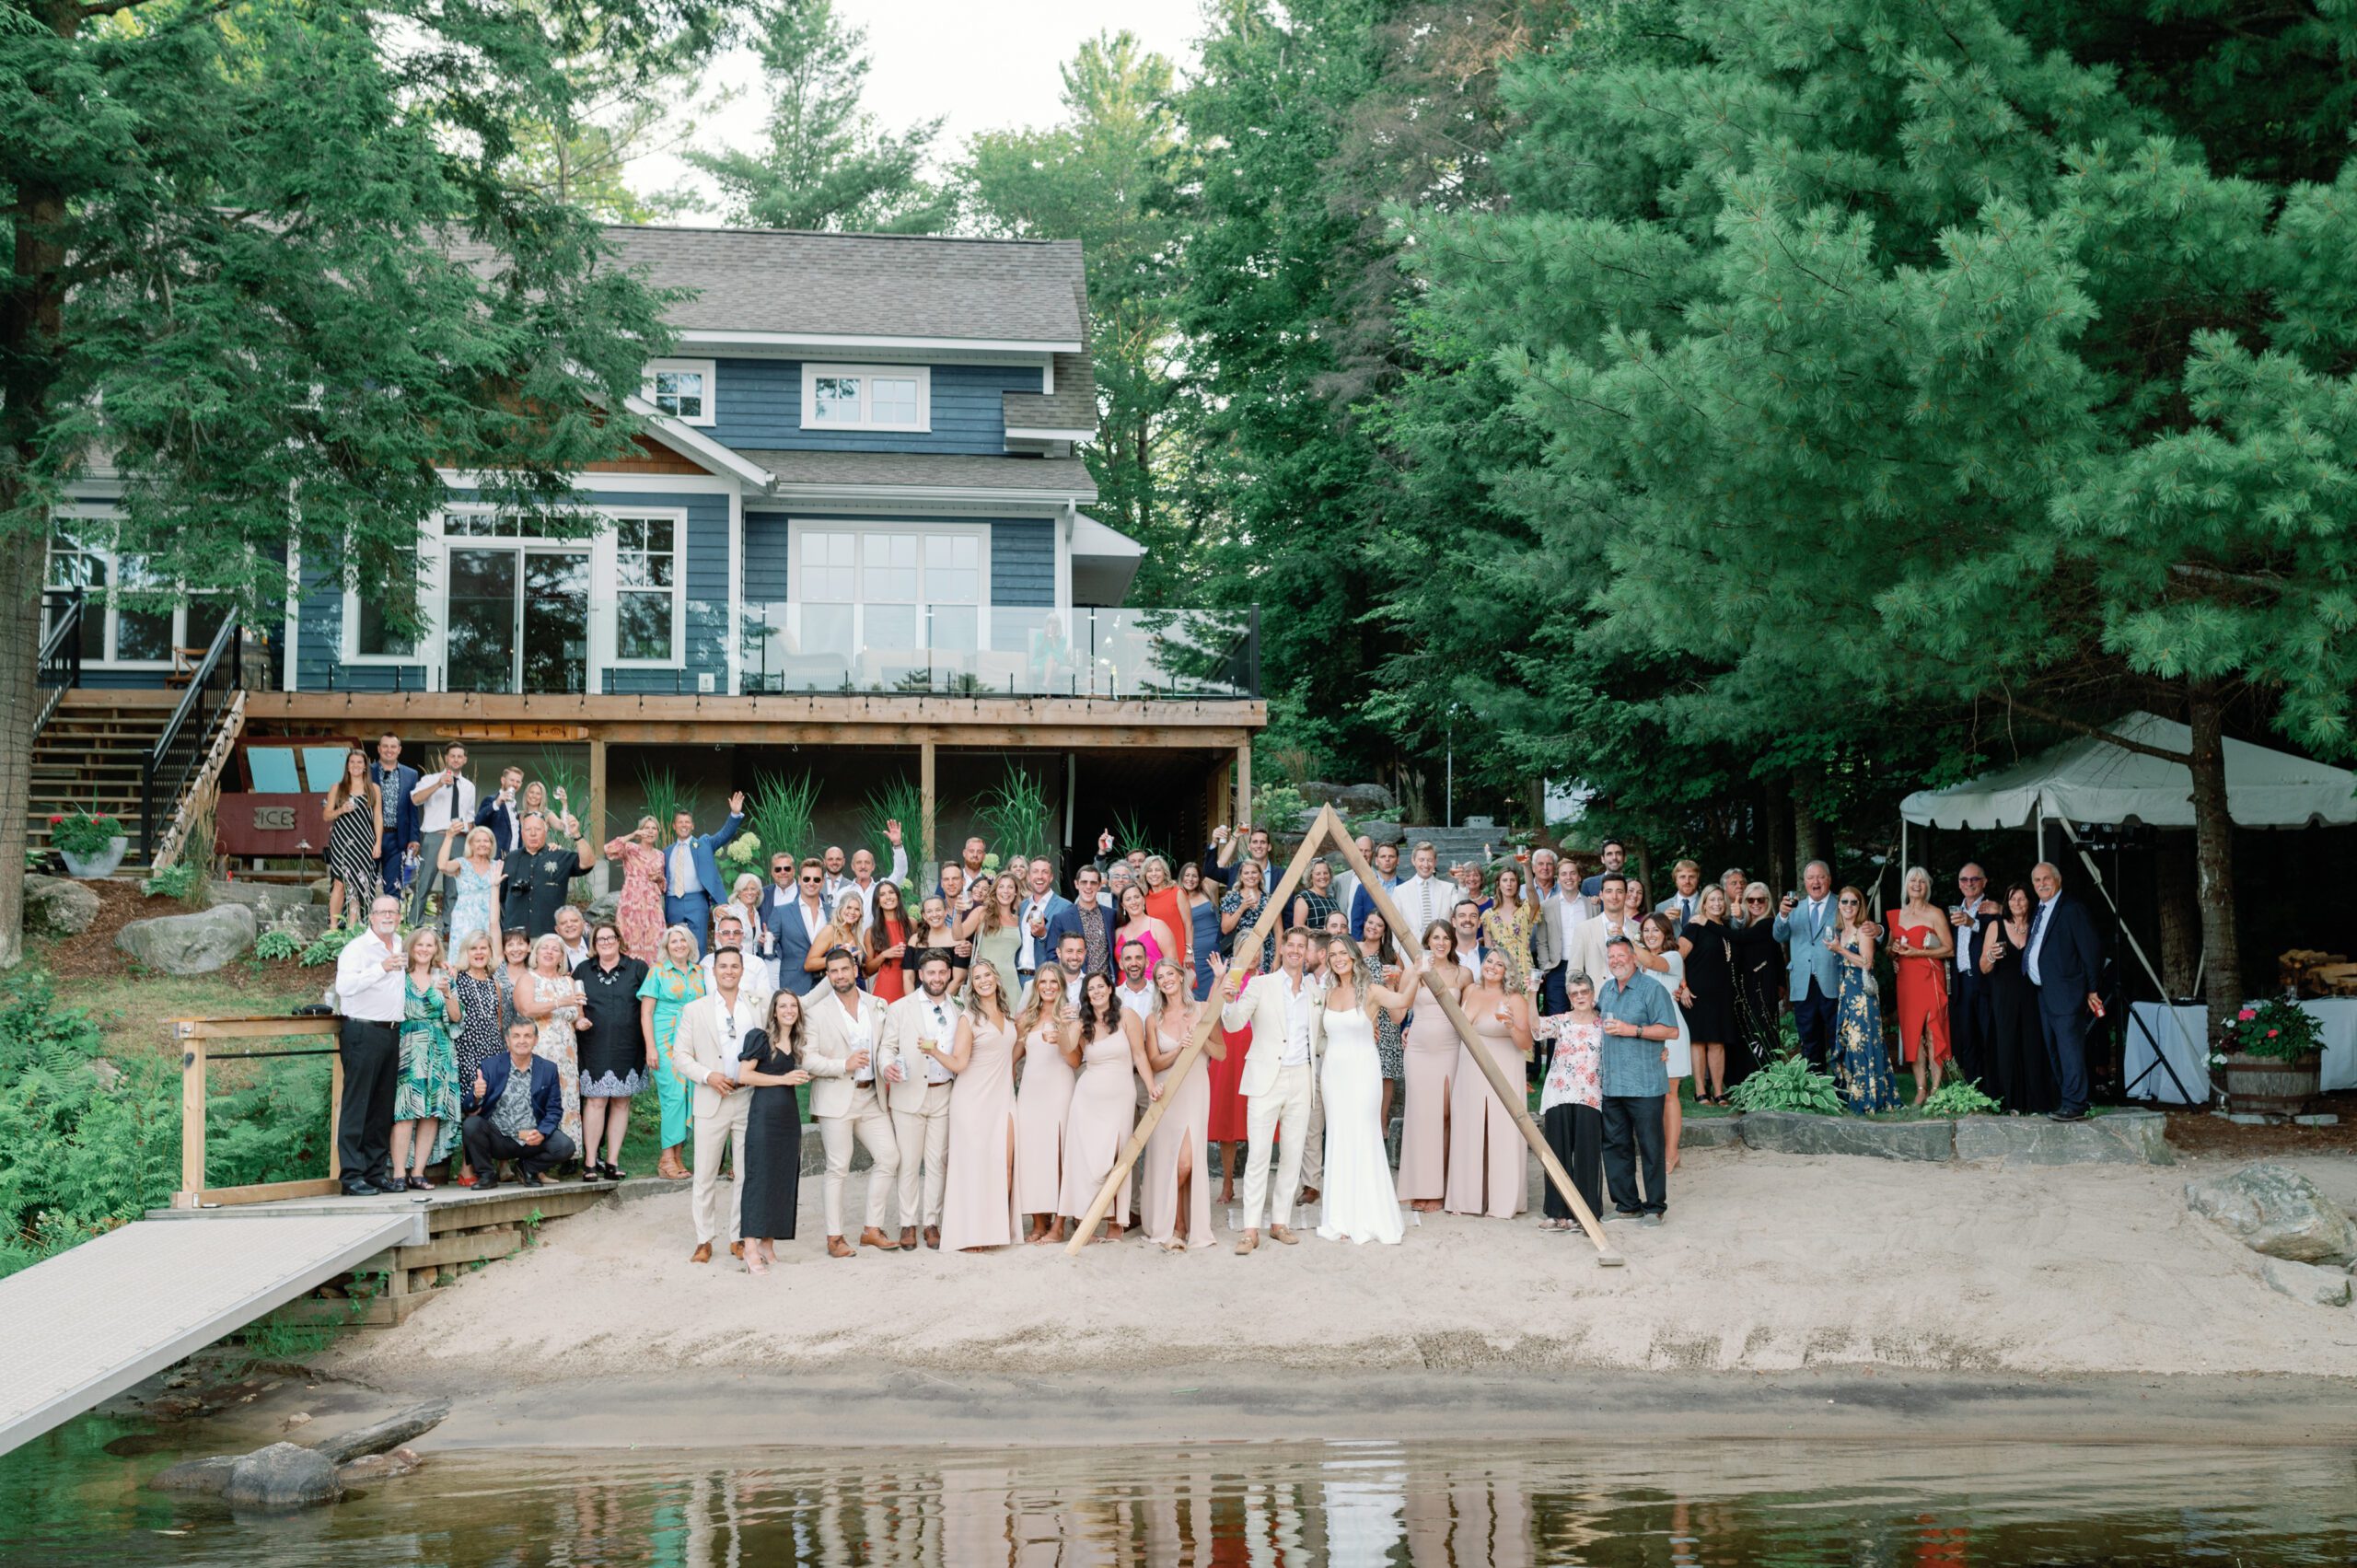 Group portrait of wedding guests at backyard wedding on Muskoka Lake.